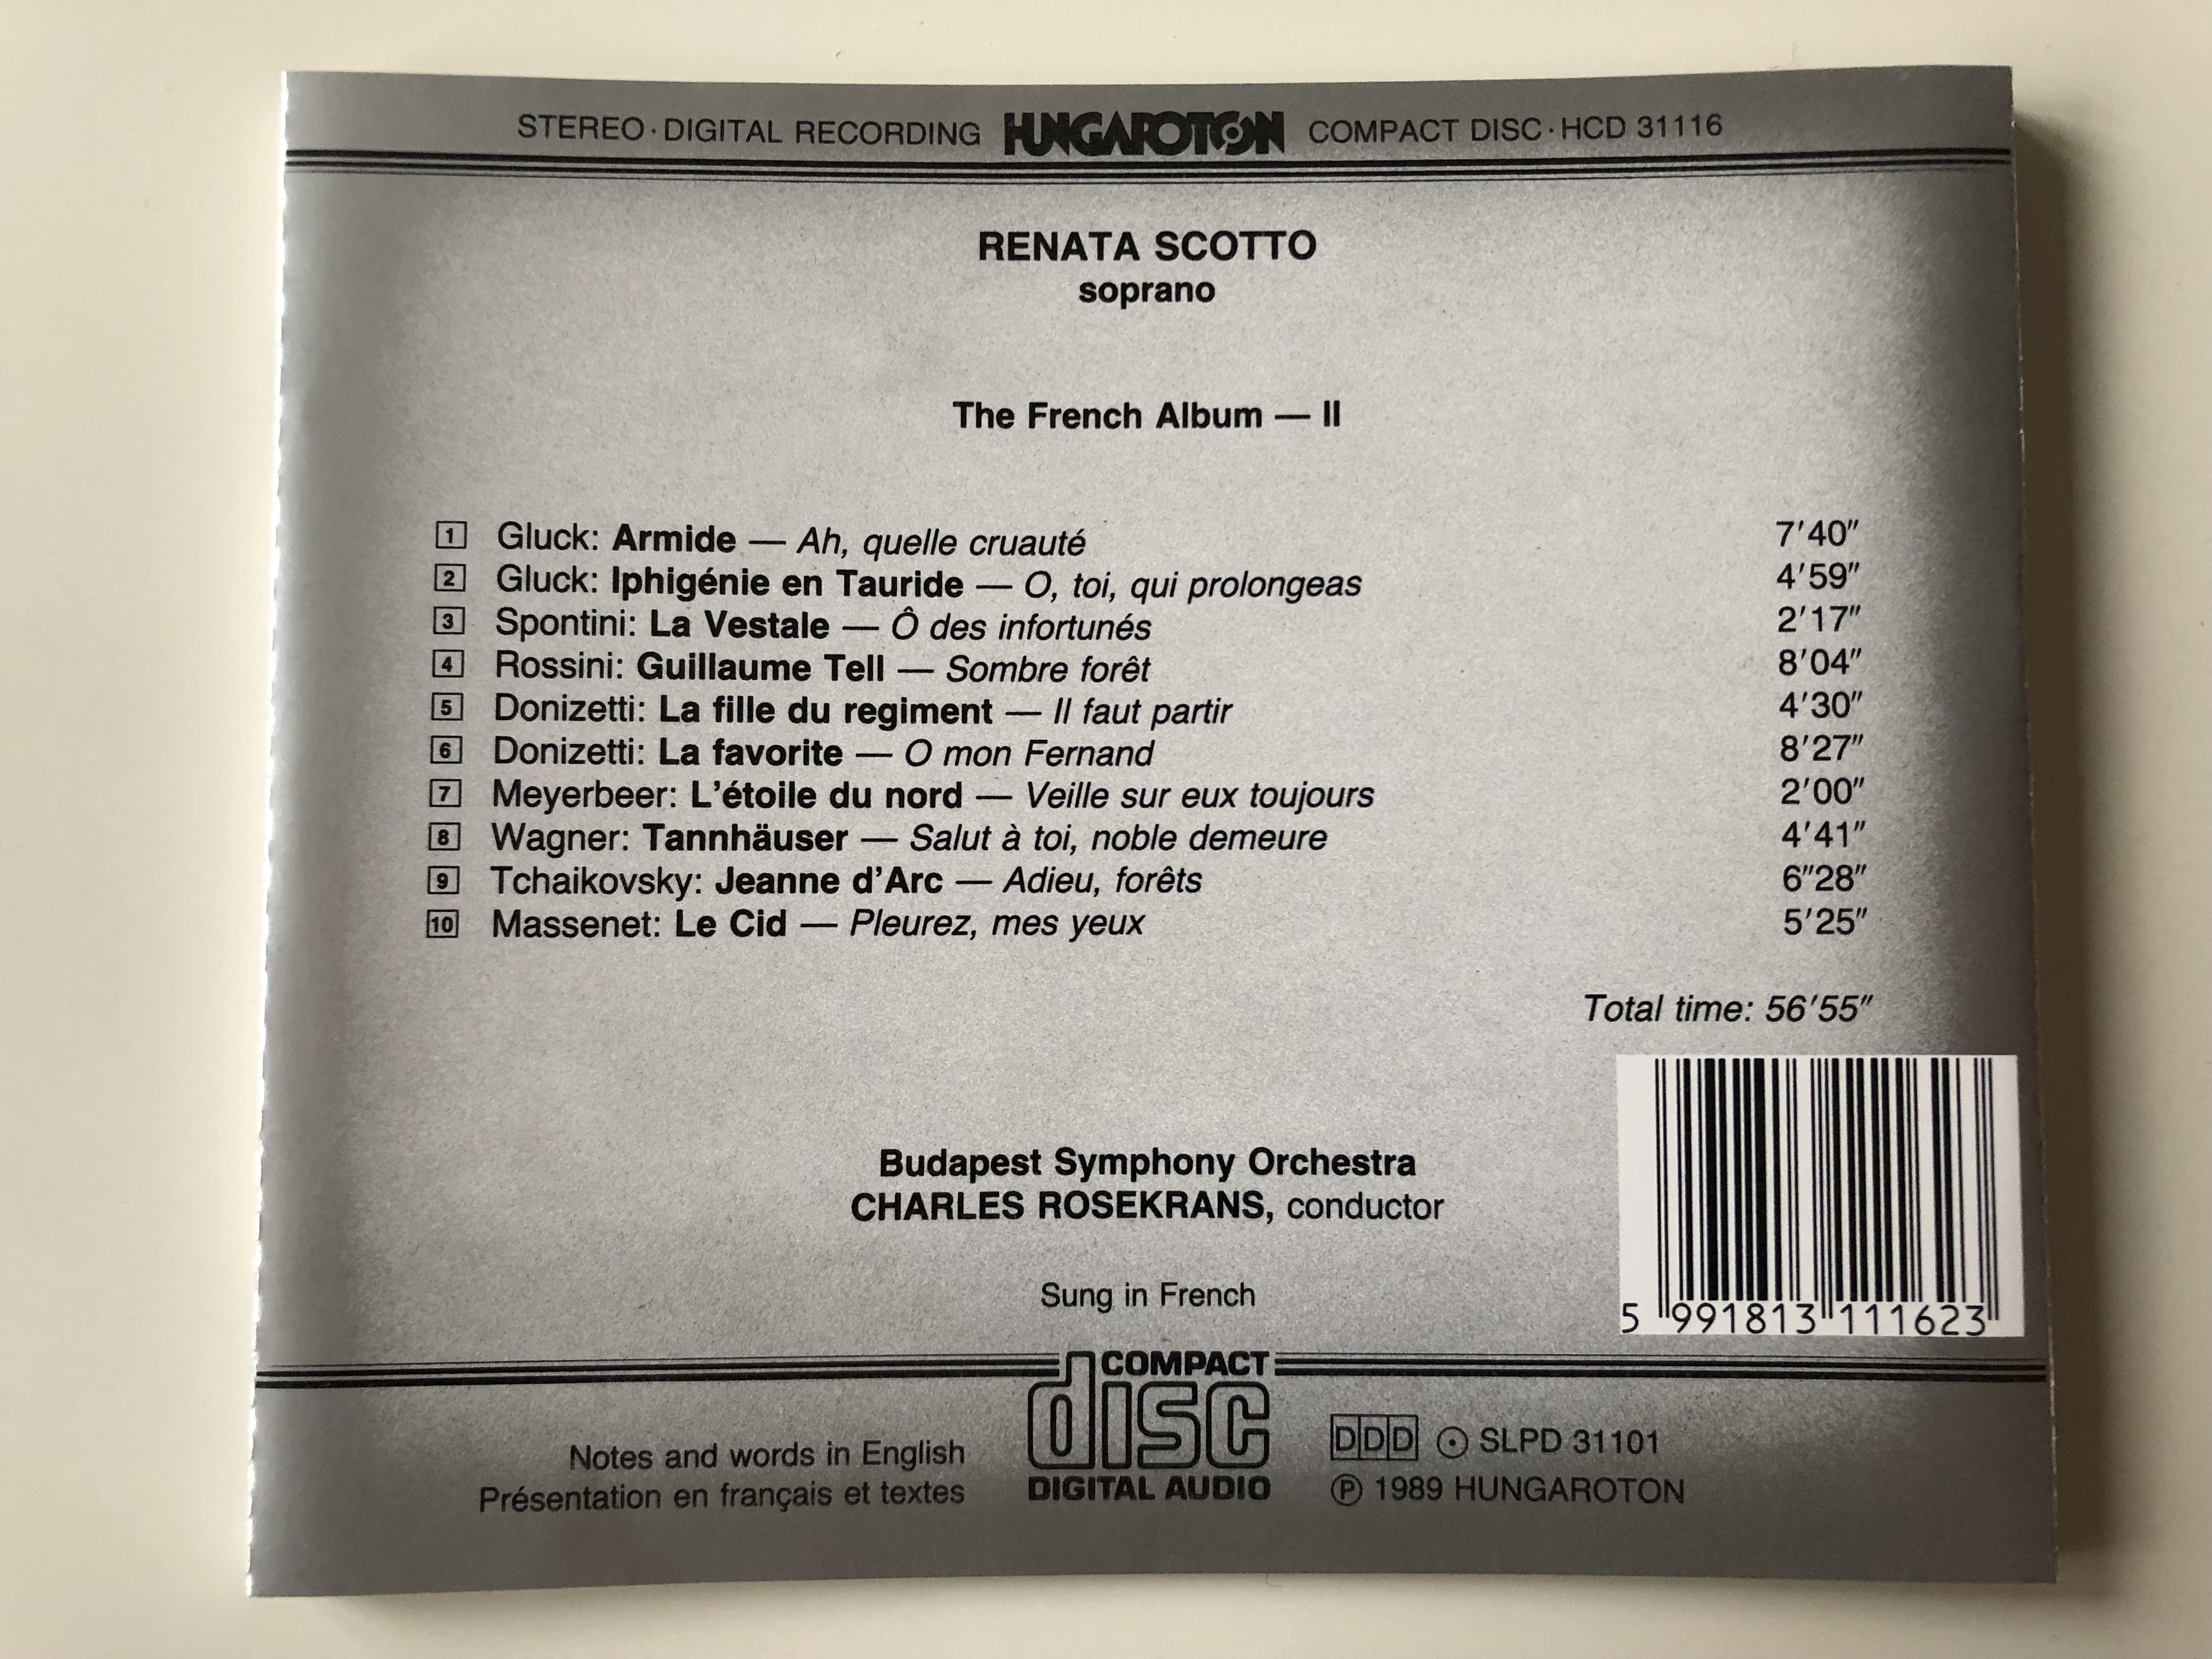 renata-scotto-the-french-album-2-gluck-rossini-donizetti-meyerbeer-tchaikovsky-spontini-wagner-budapest-symphony-orchestra-cond-charles-rosekrans-hungaroton-hcd-31116-audio-cd-1989-2-.jpg